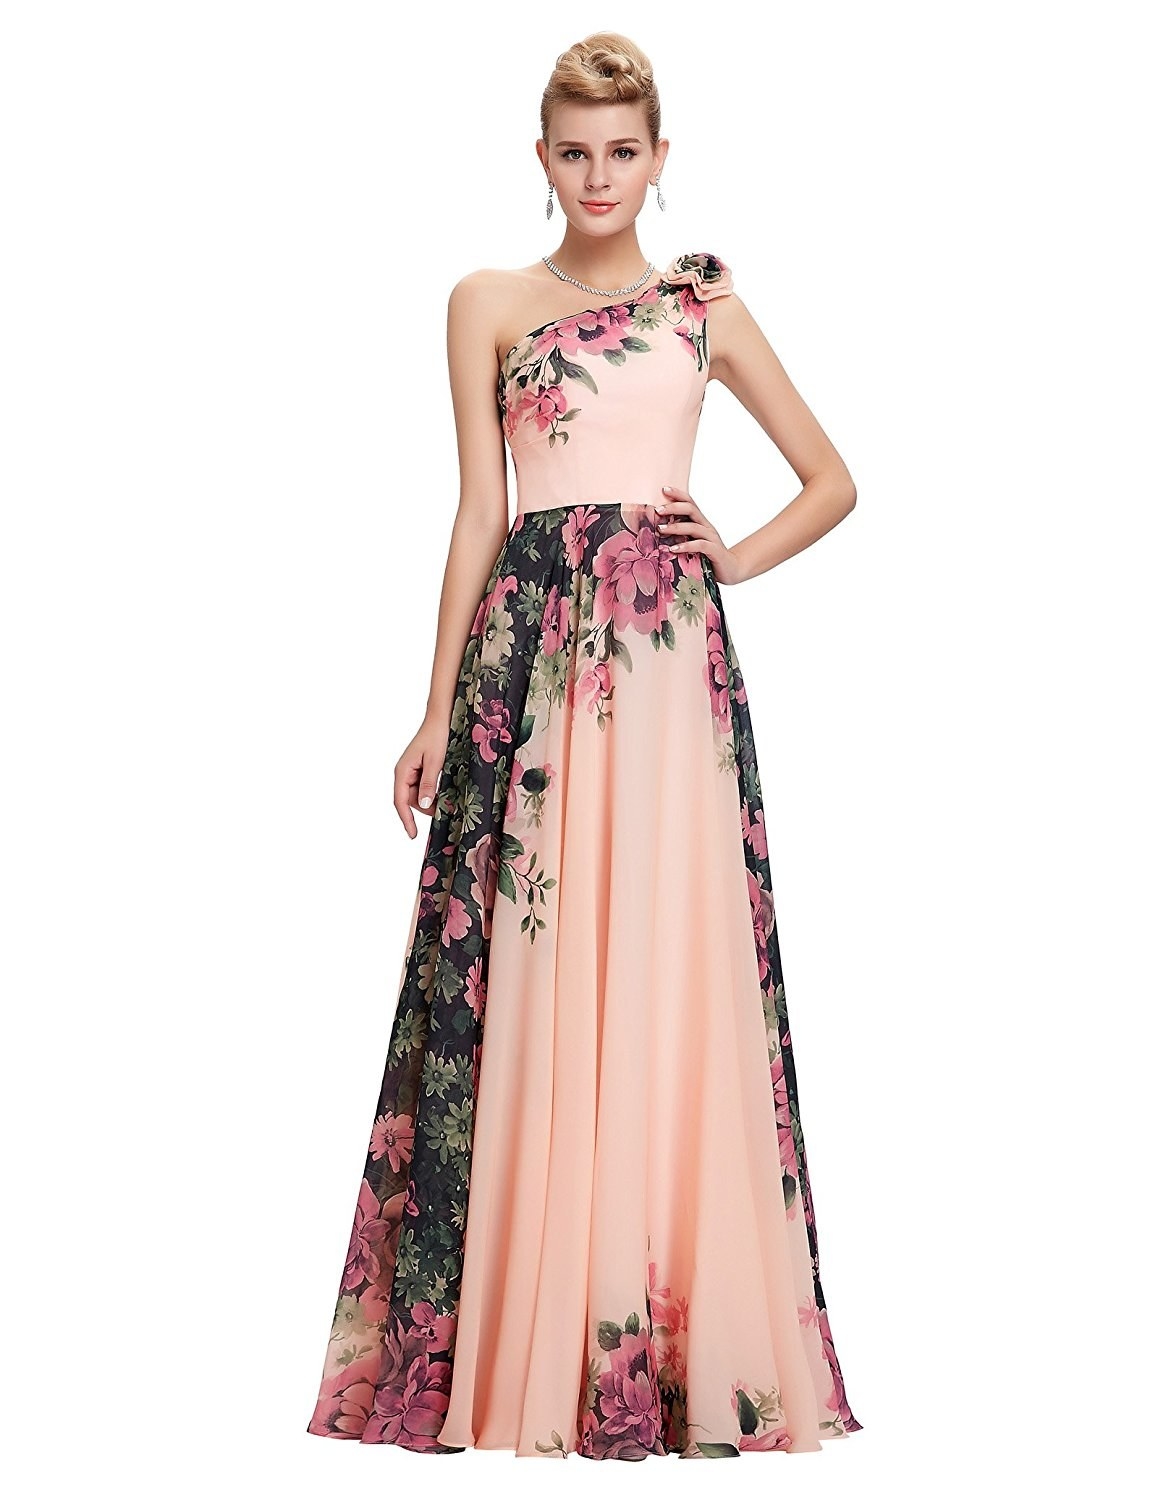 nvan-design: Amazon Prime Formal Dresses Tall 16